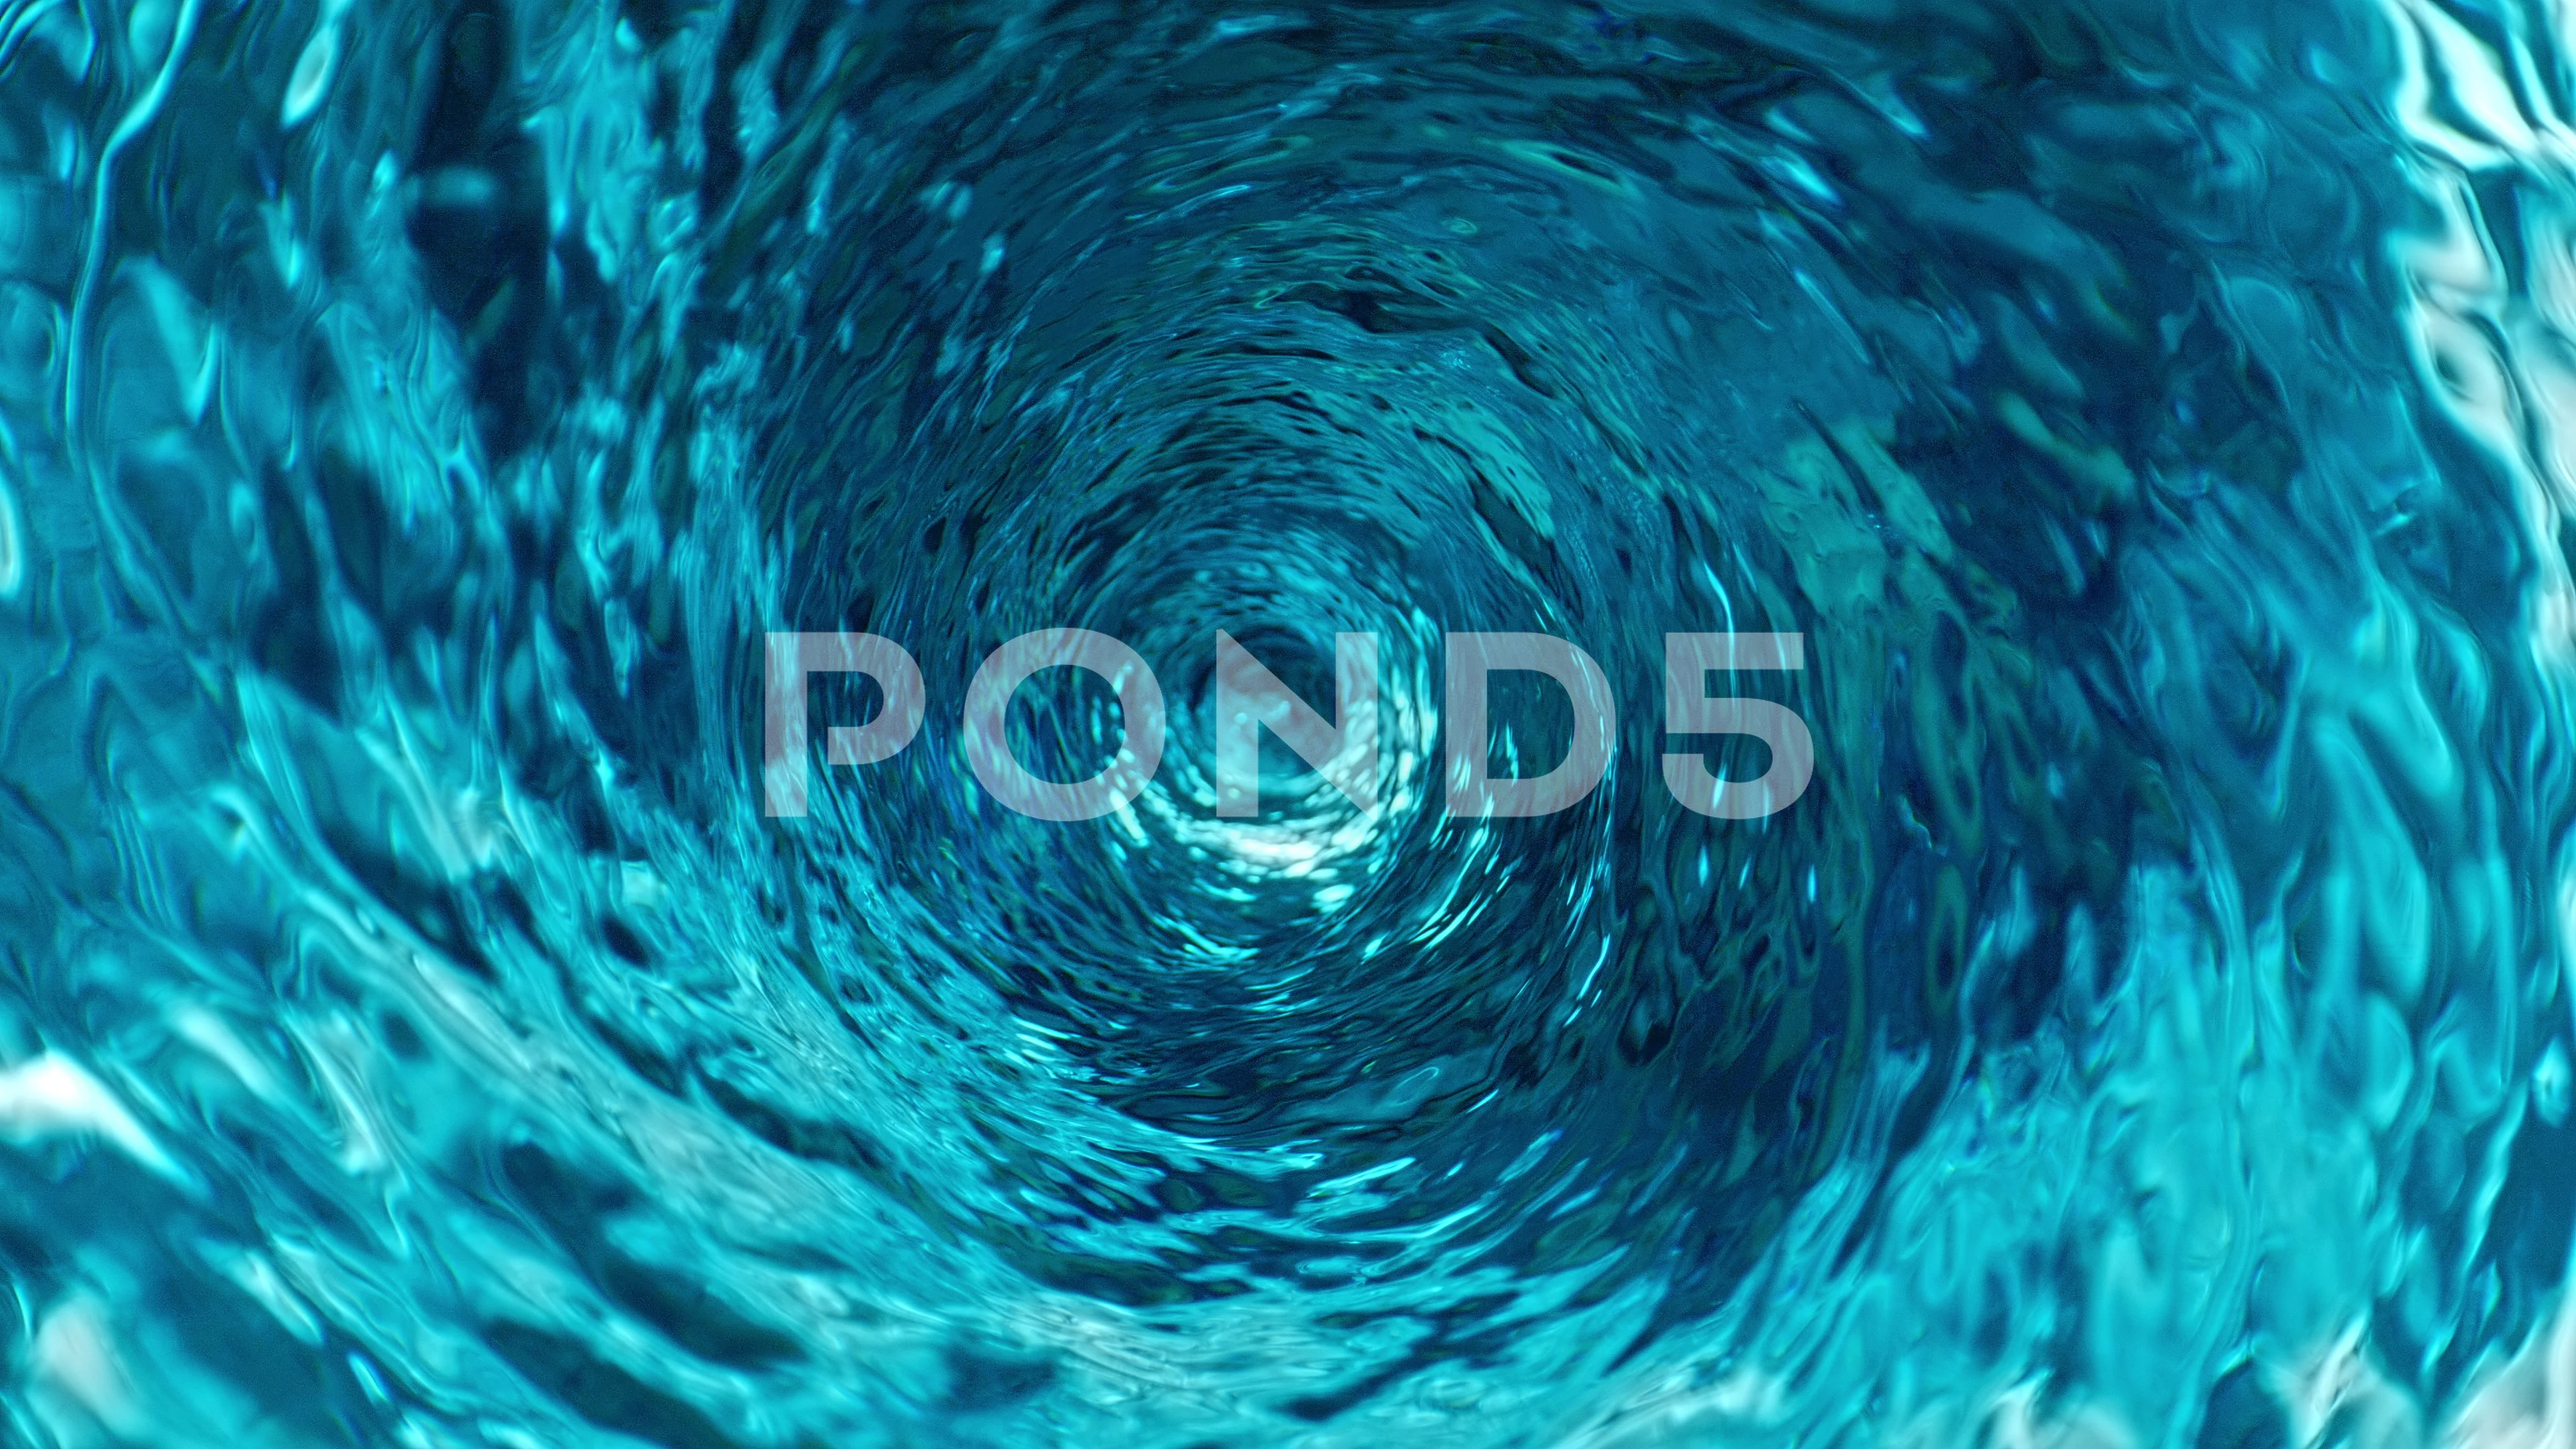 https://images.pond5.com/water-vortex-swirling-counterclockwise-slow-162889665_prevstill.jpeg